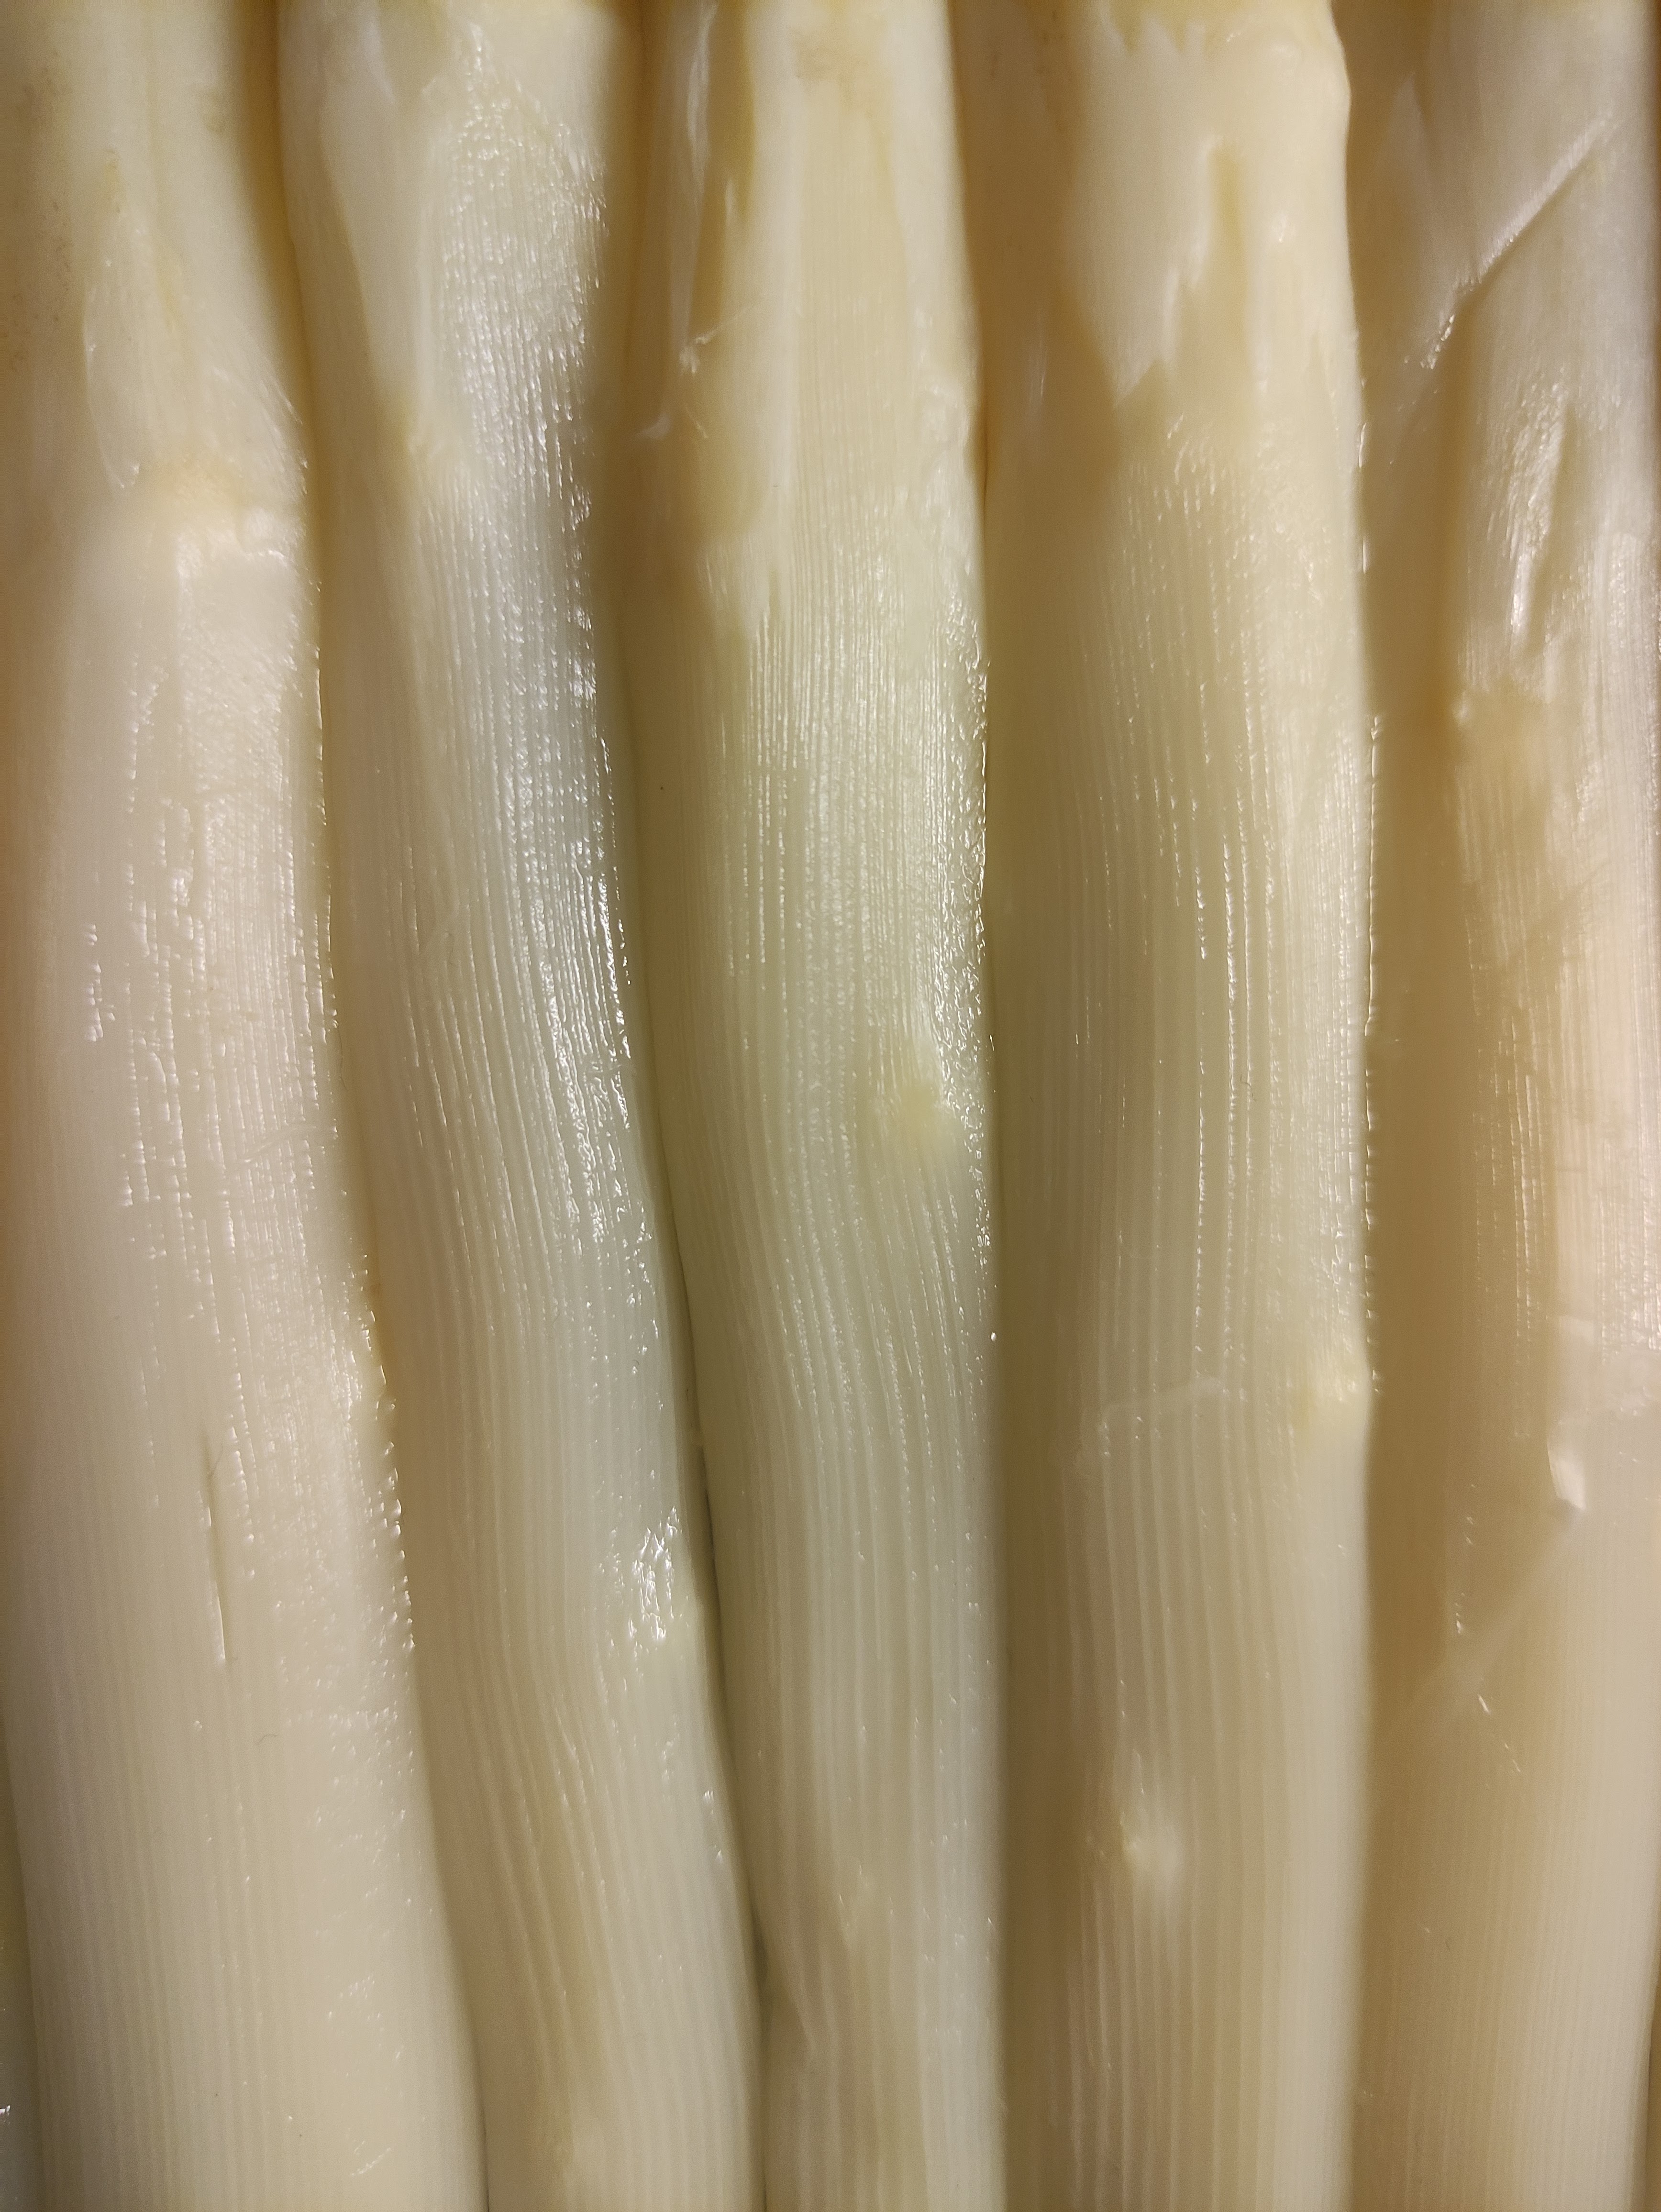 asparagus in a line